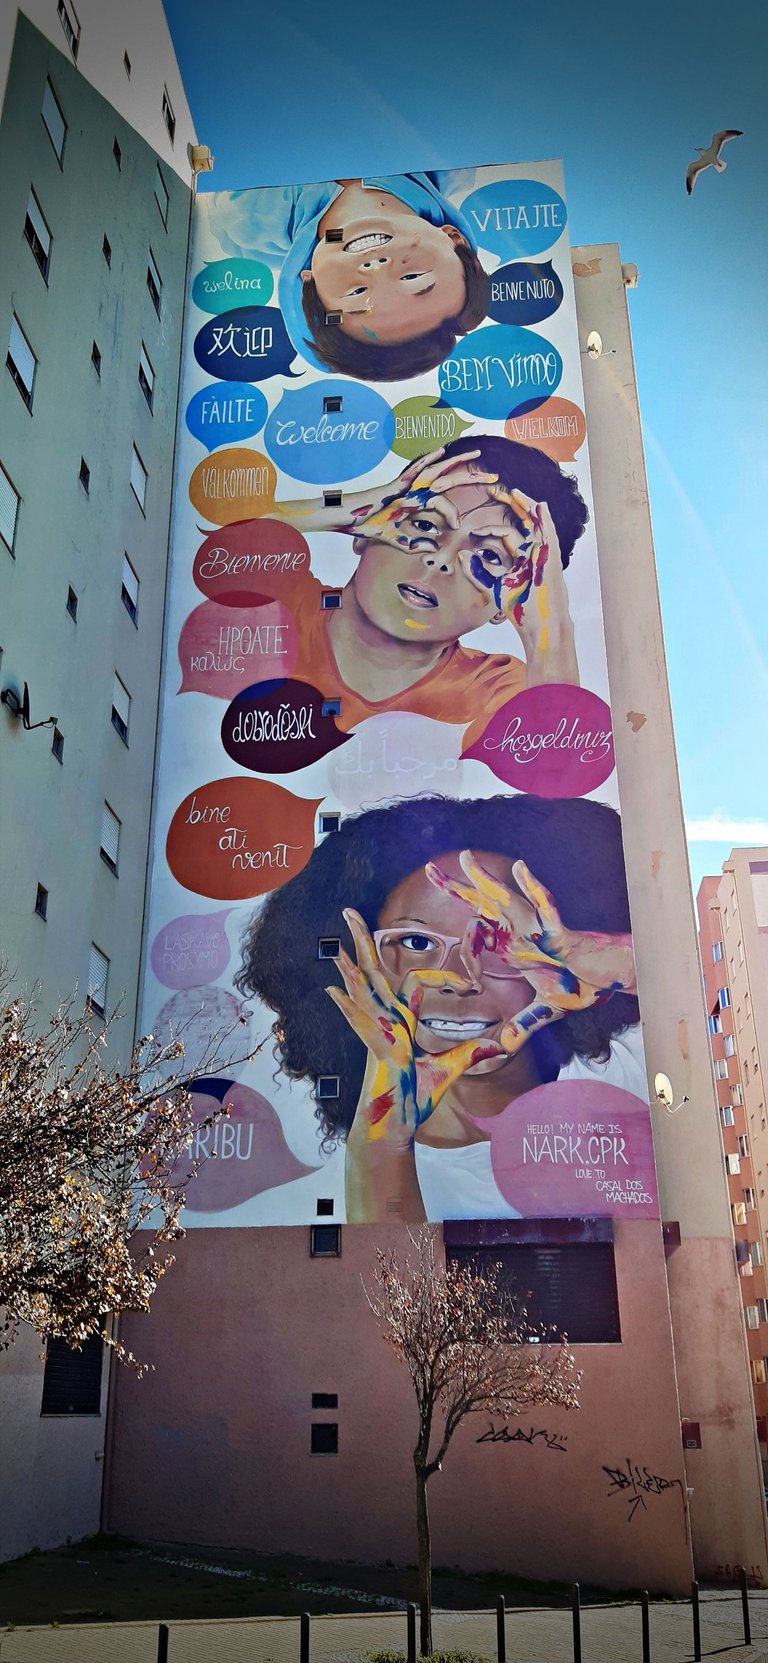 CCC's Street Art Contest #183 - "Welcome" Nark.Cpk, Lisboa, Portugal